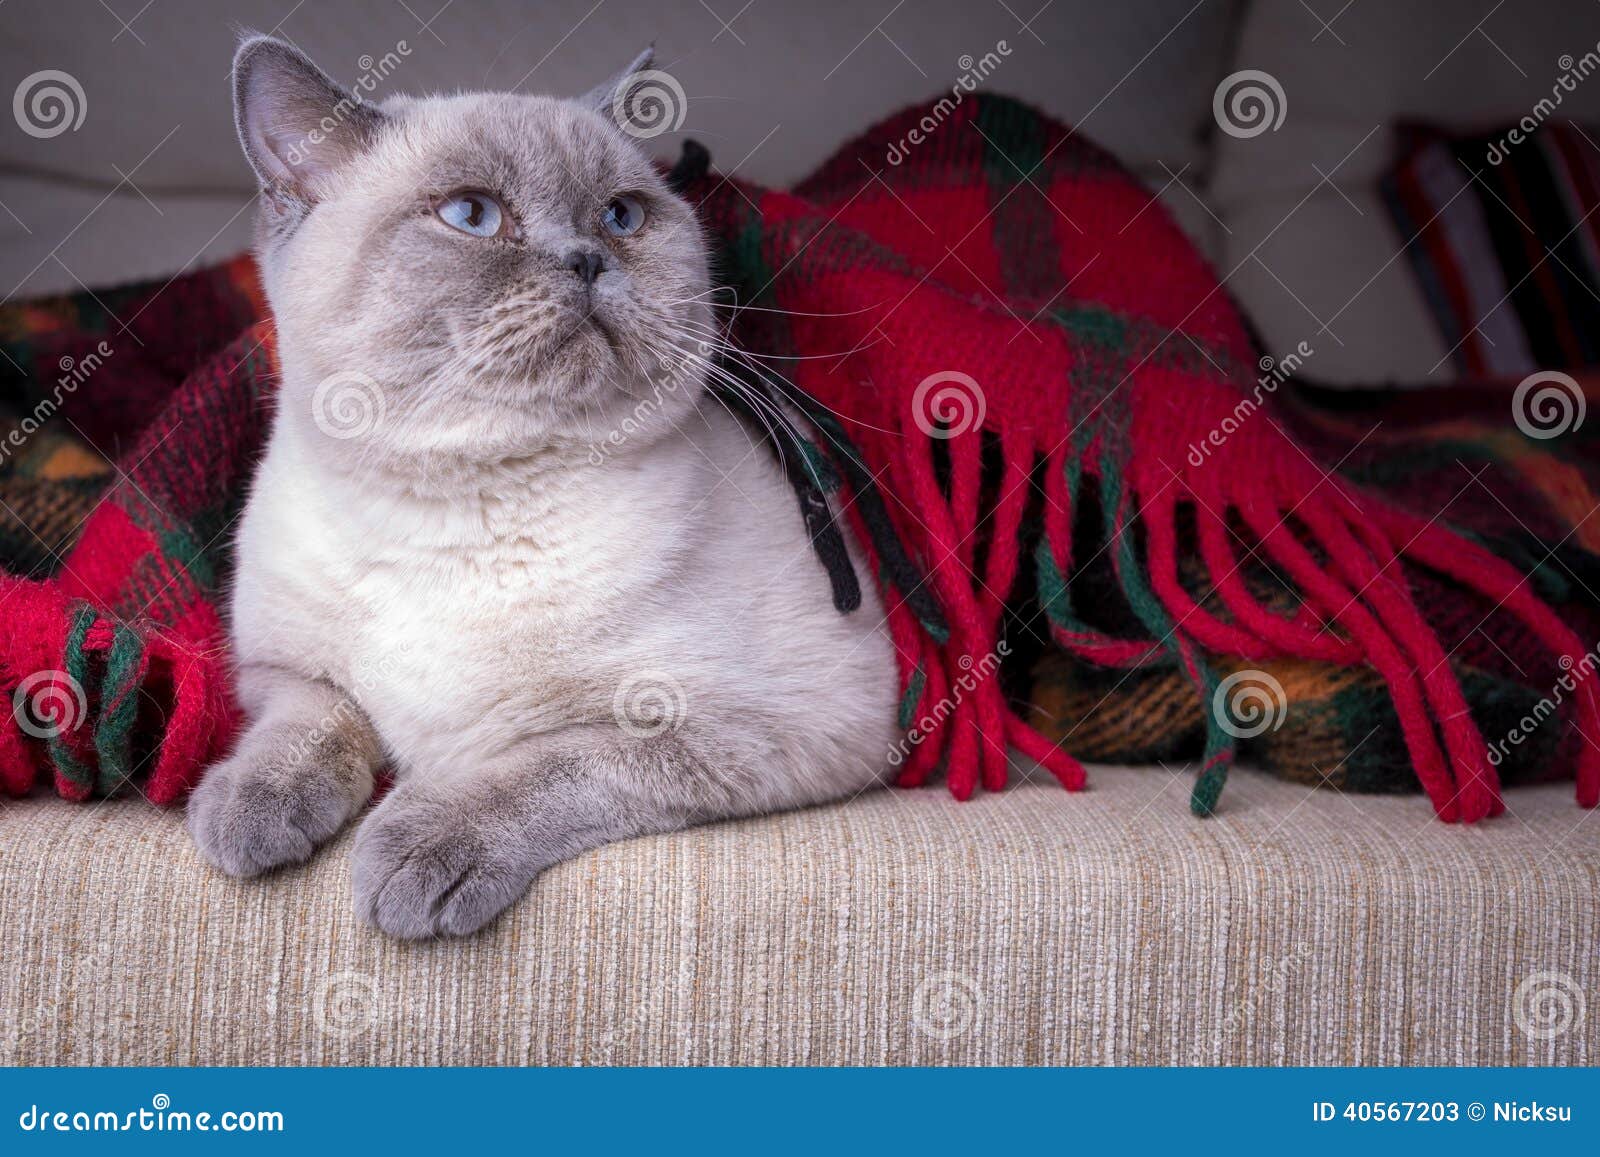 British Shorthair Colorpoint Cat Stock Photo 40567203 Megapixl